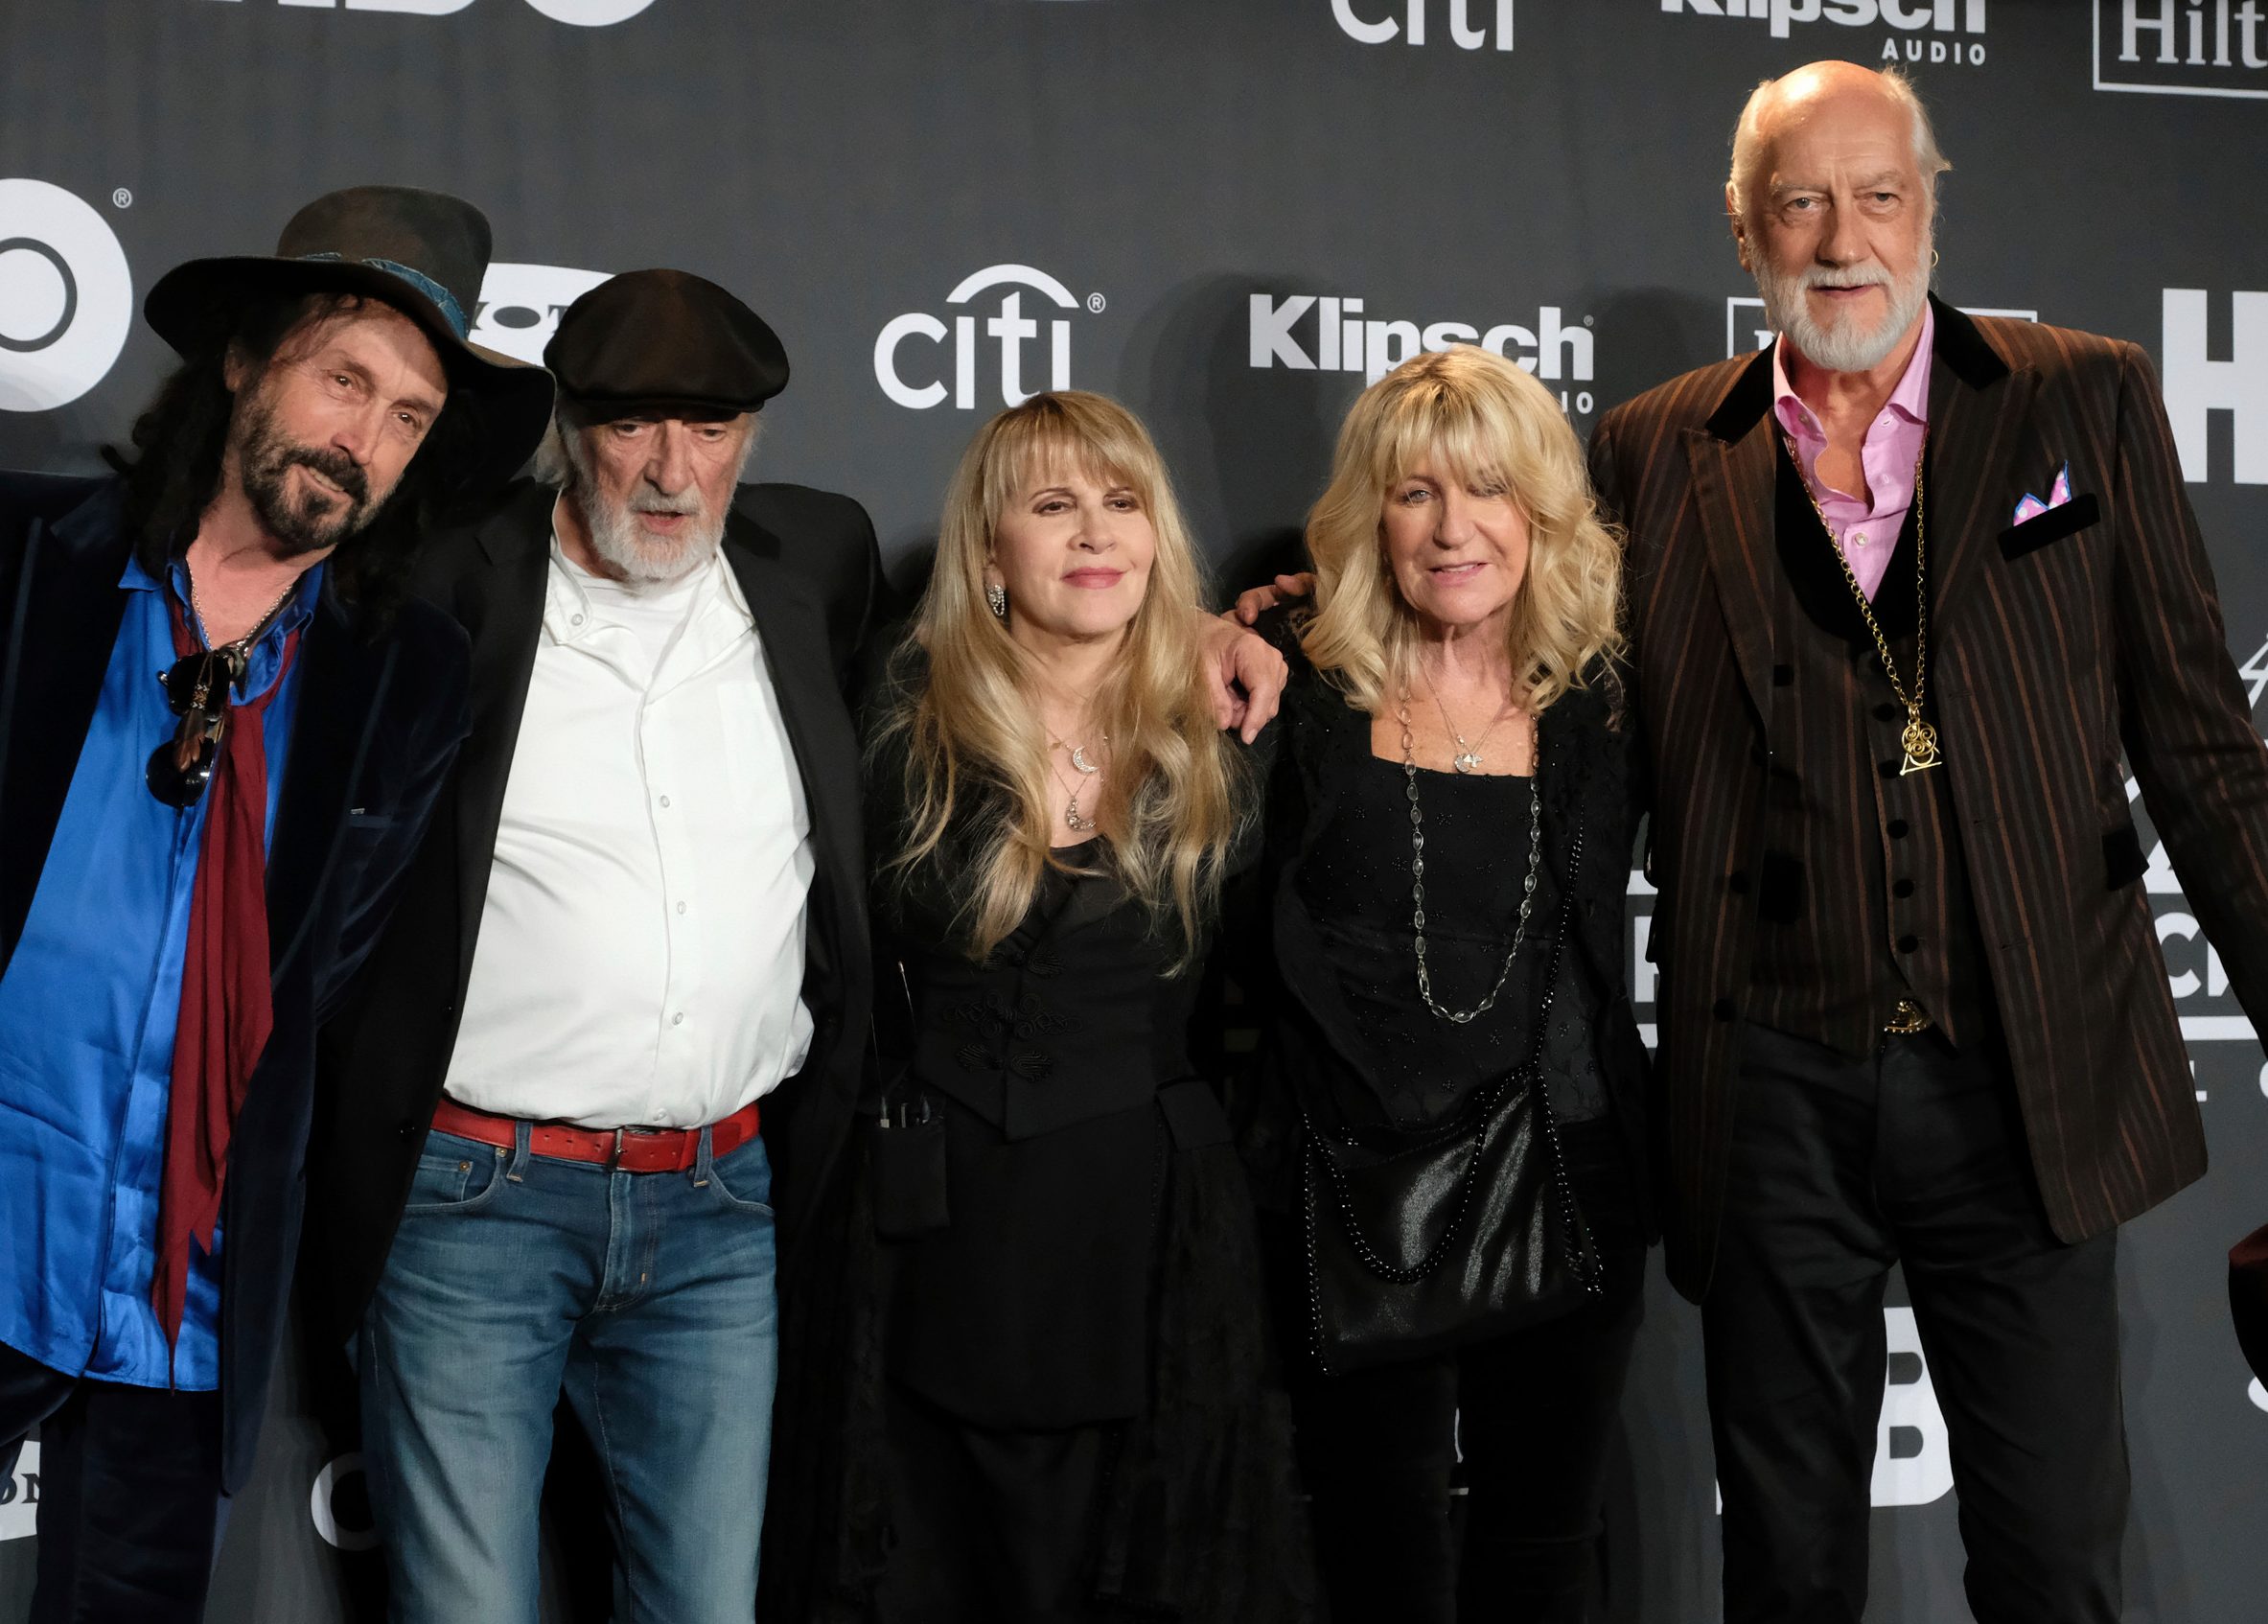 Mike Campbell, John McVie, Stevie Nicks, Christine McVie and Mick Fleetwood